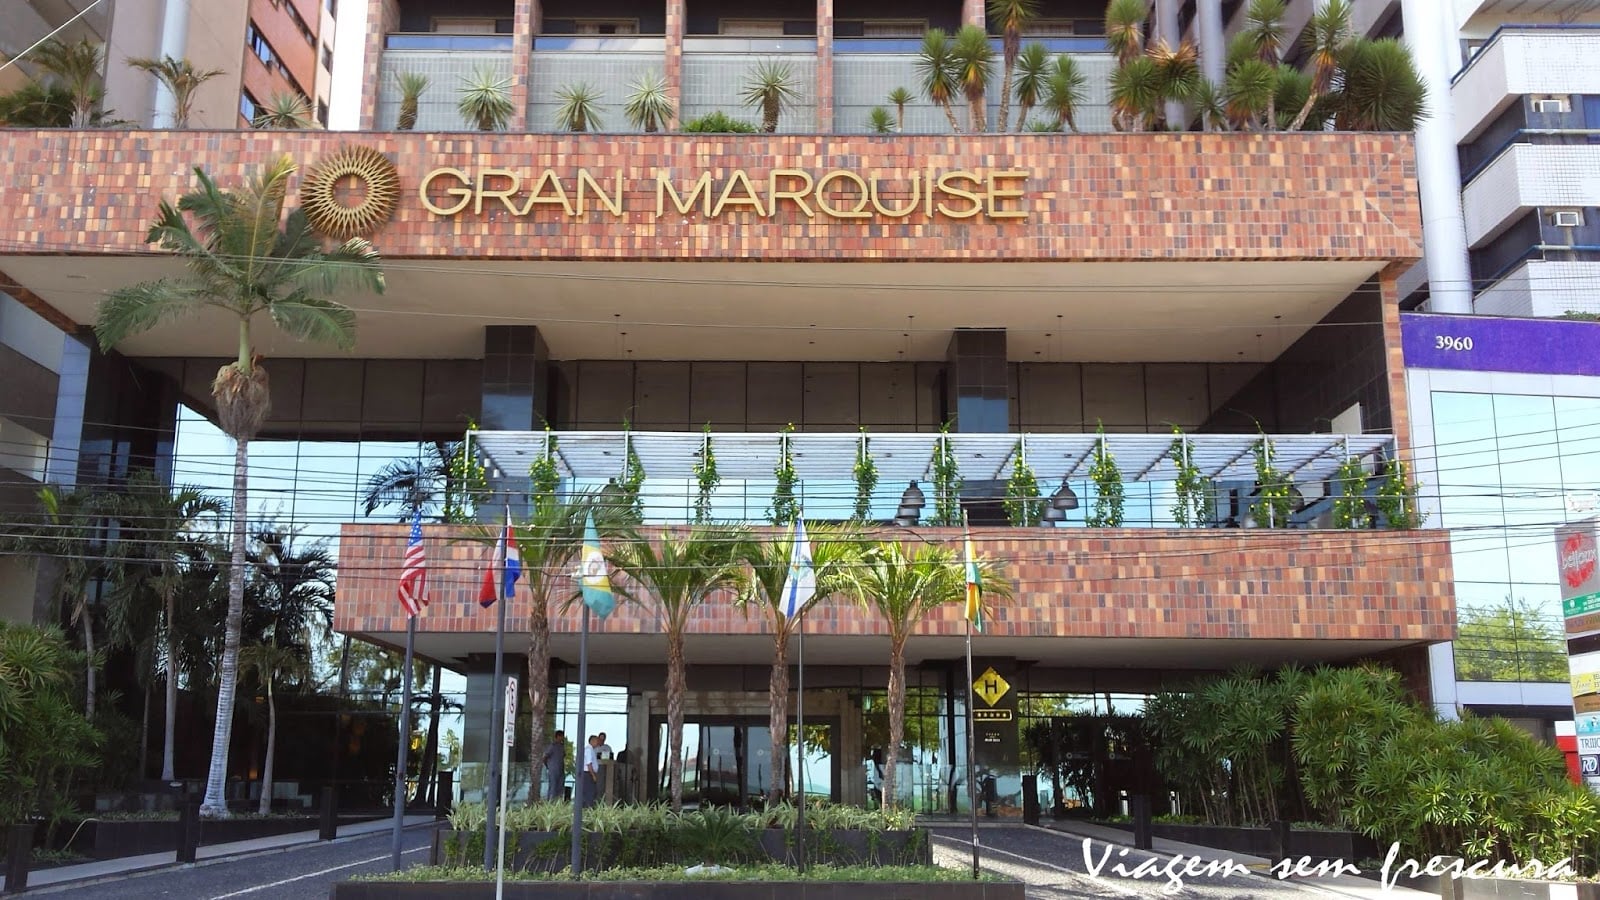 Hotel Gran Marquise contrata: COMMIS (Ajudante de Garçom)